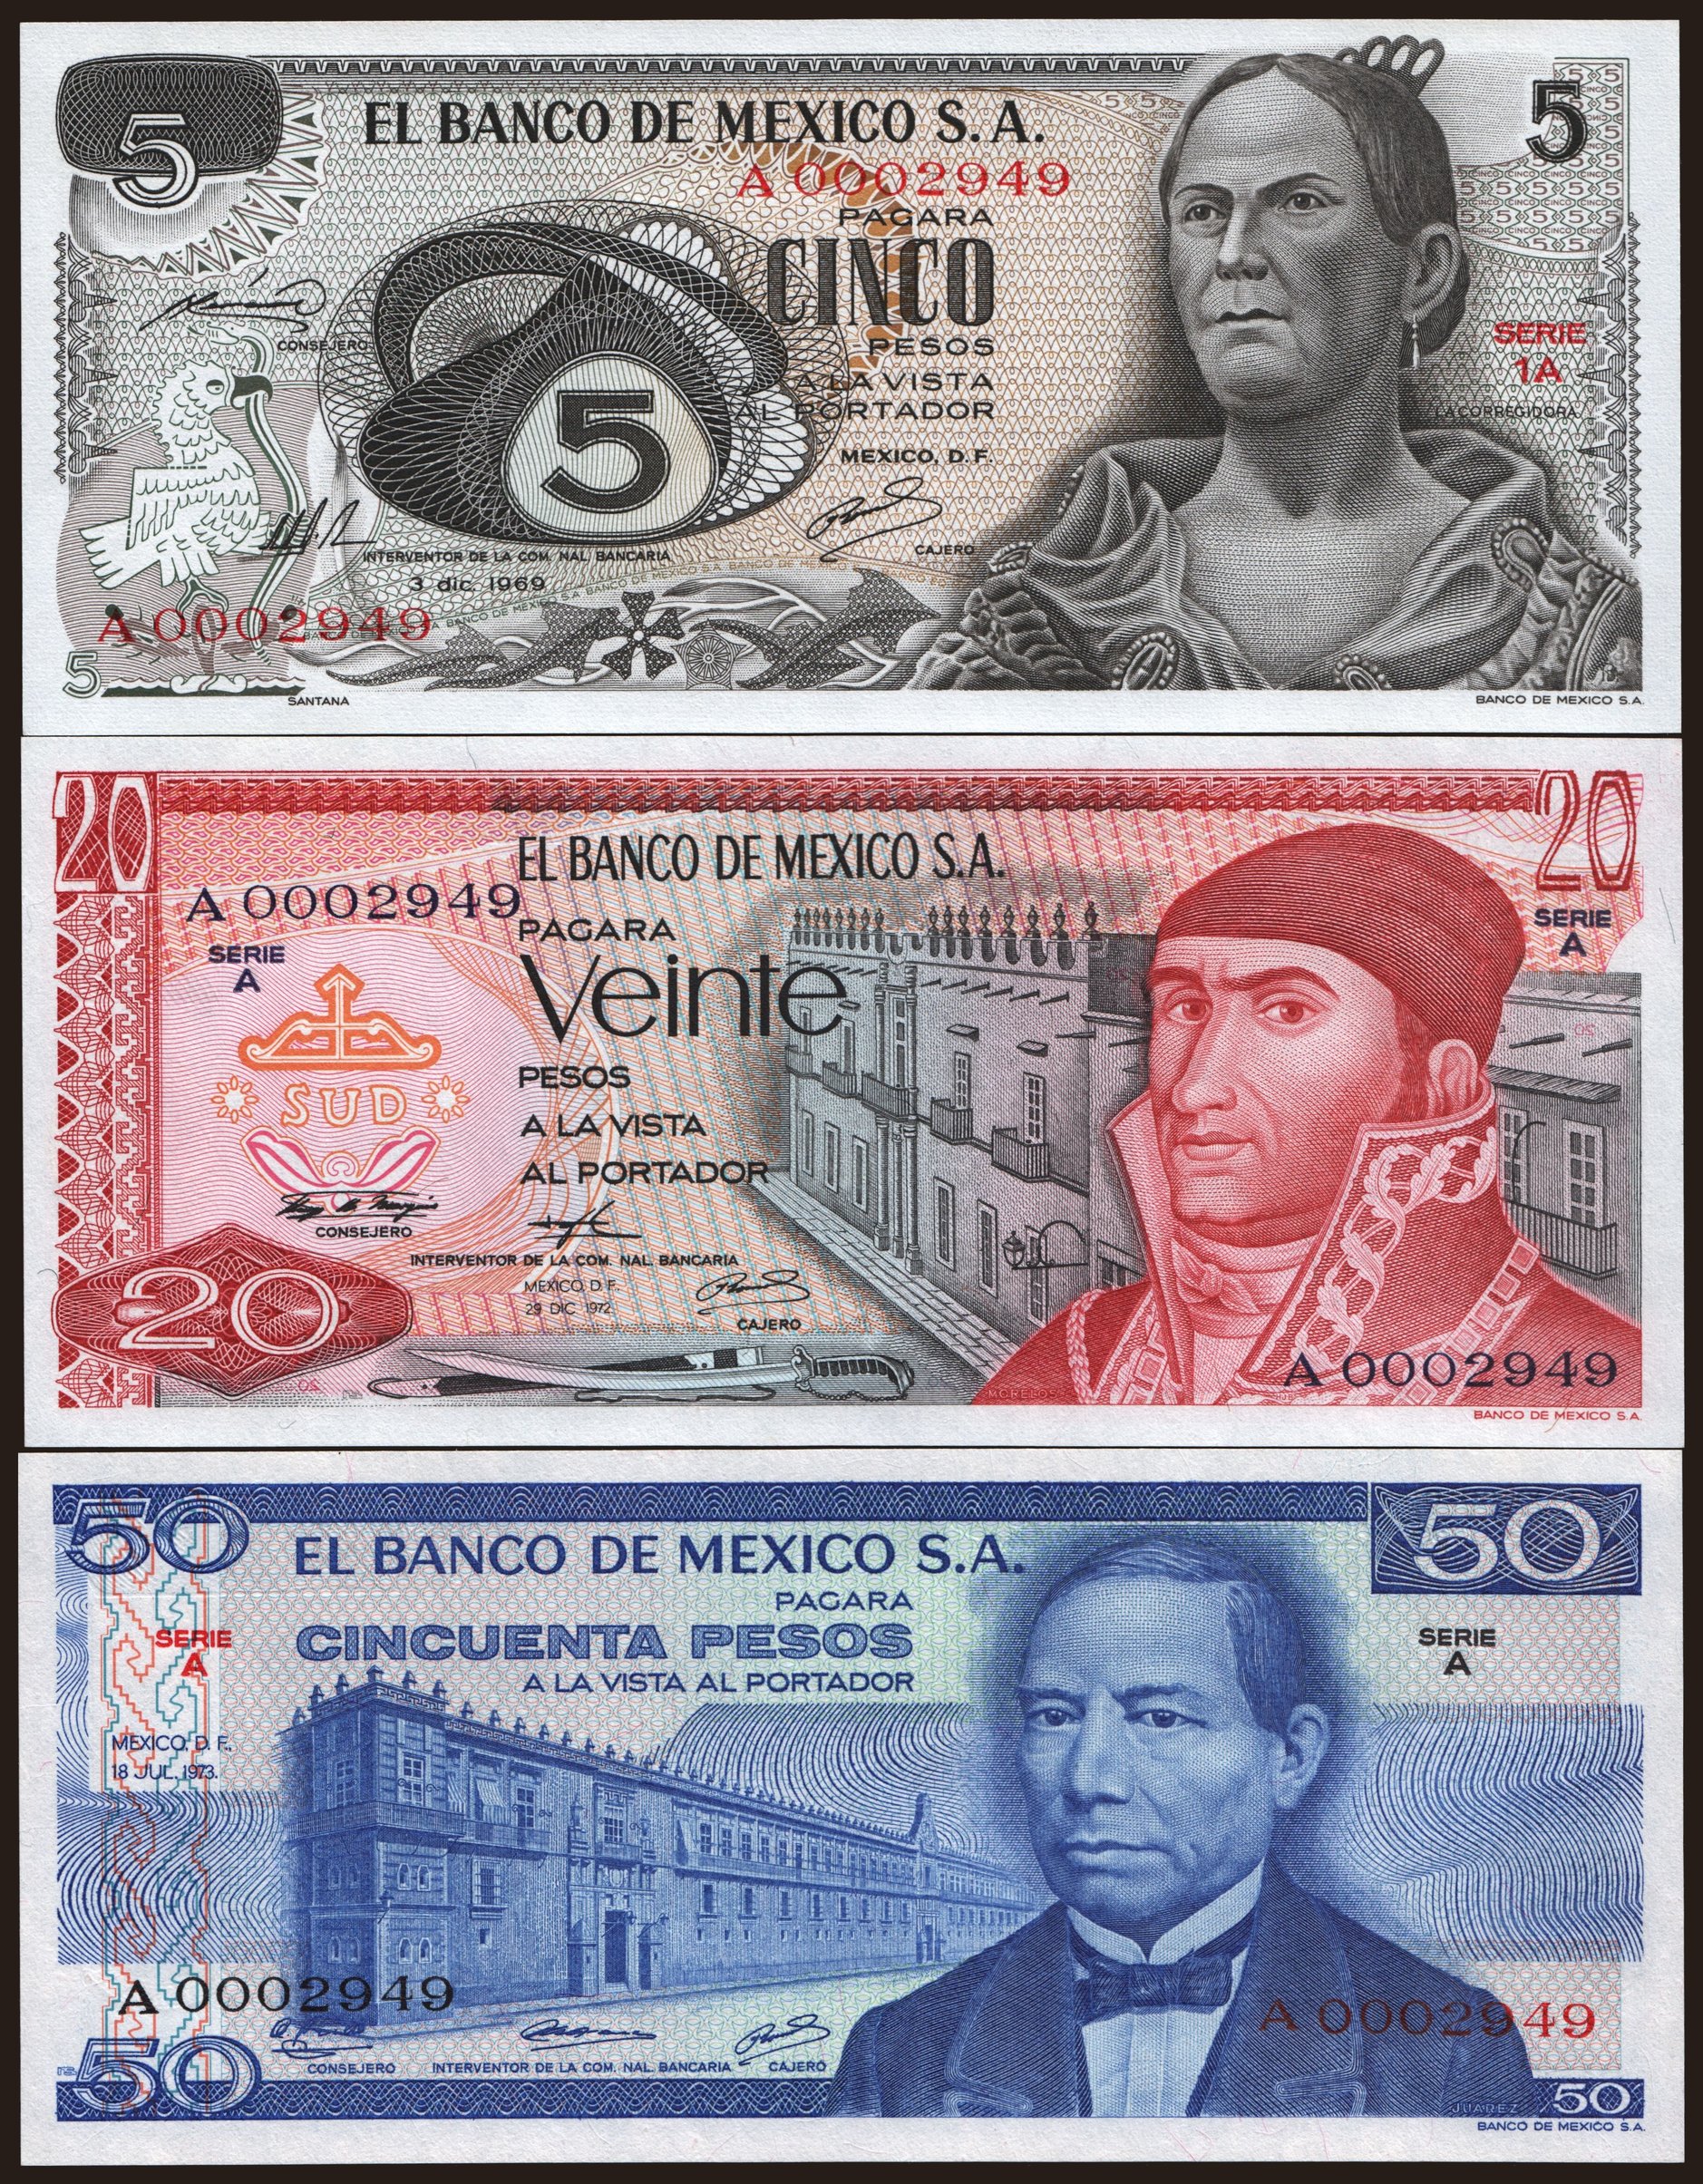 5, 20, 50 pesos, 1969-1973, A 0002949